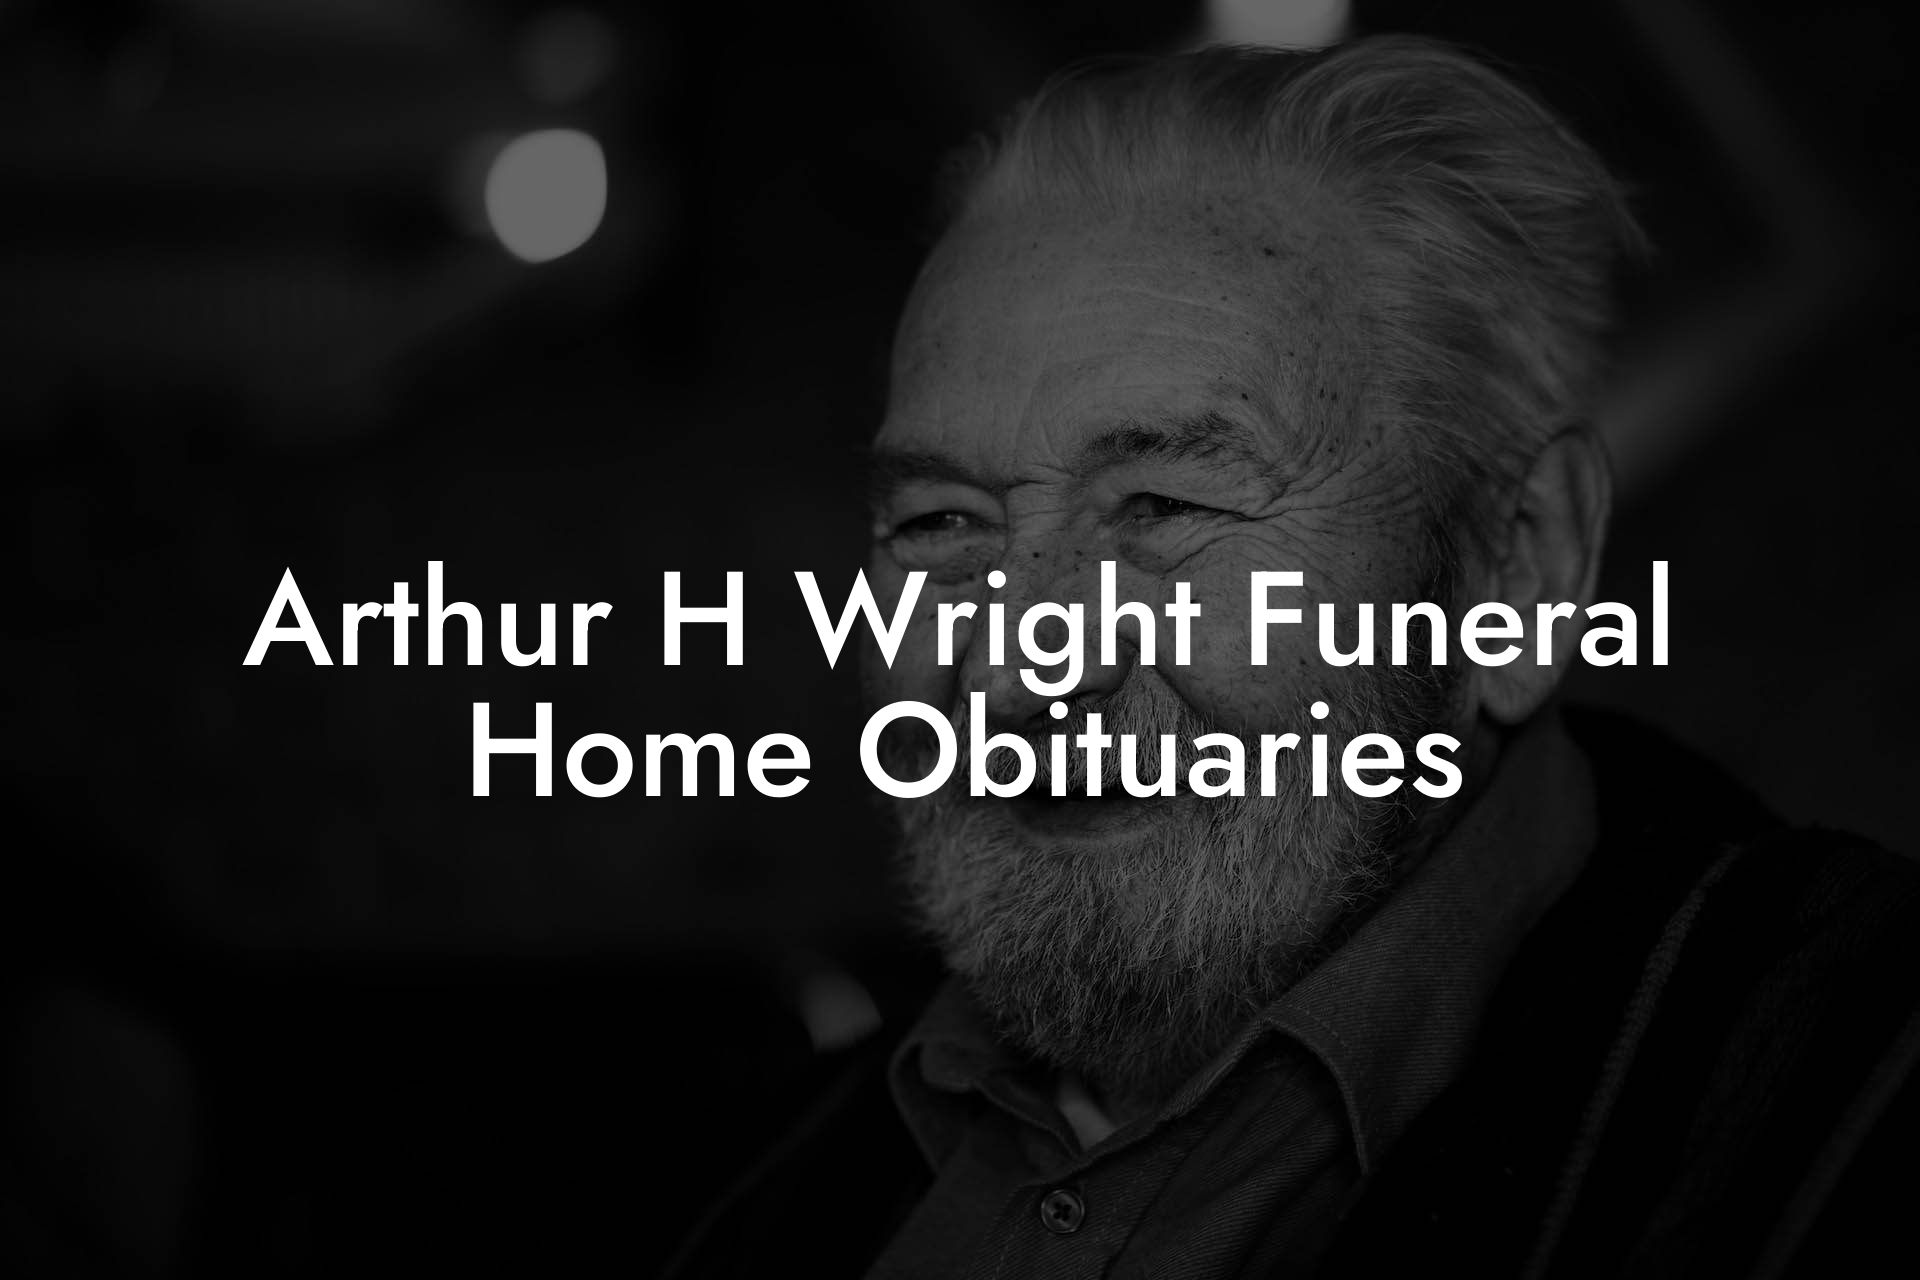 Arthur H Wright Funeral Home Obituaries